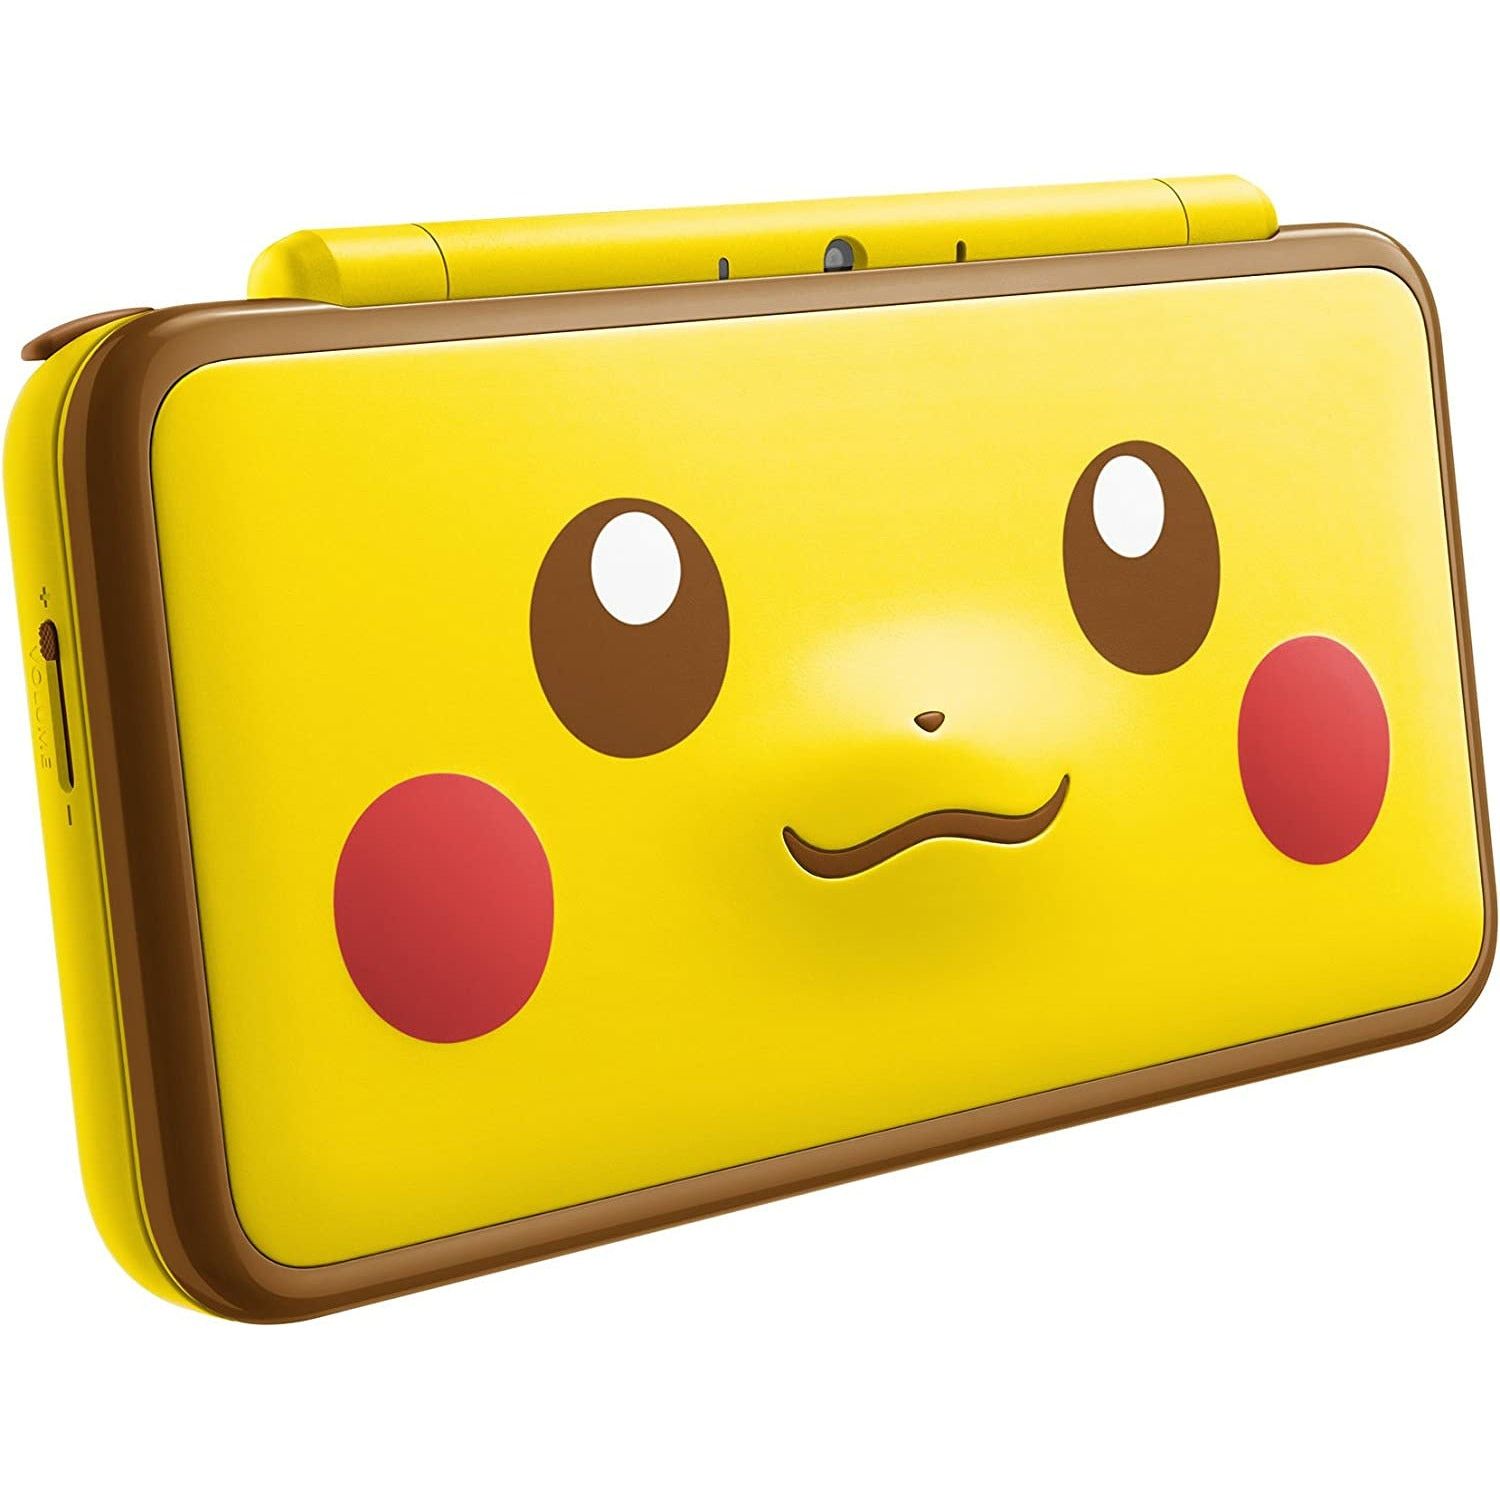 *New* 2DSXL System - Pikachu Edition